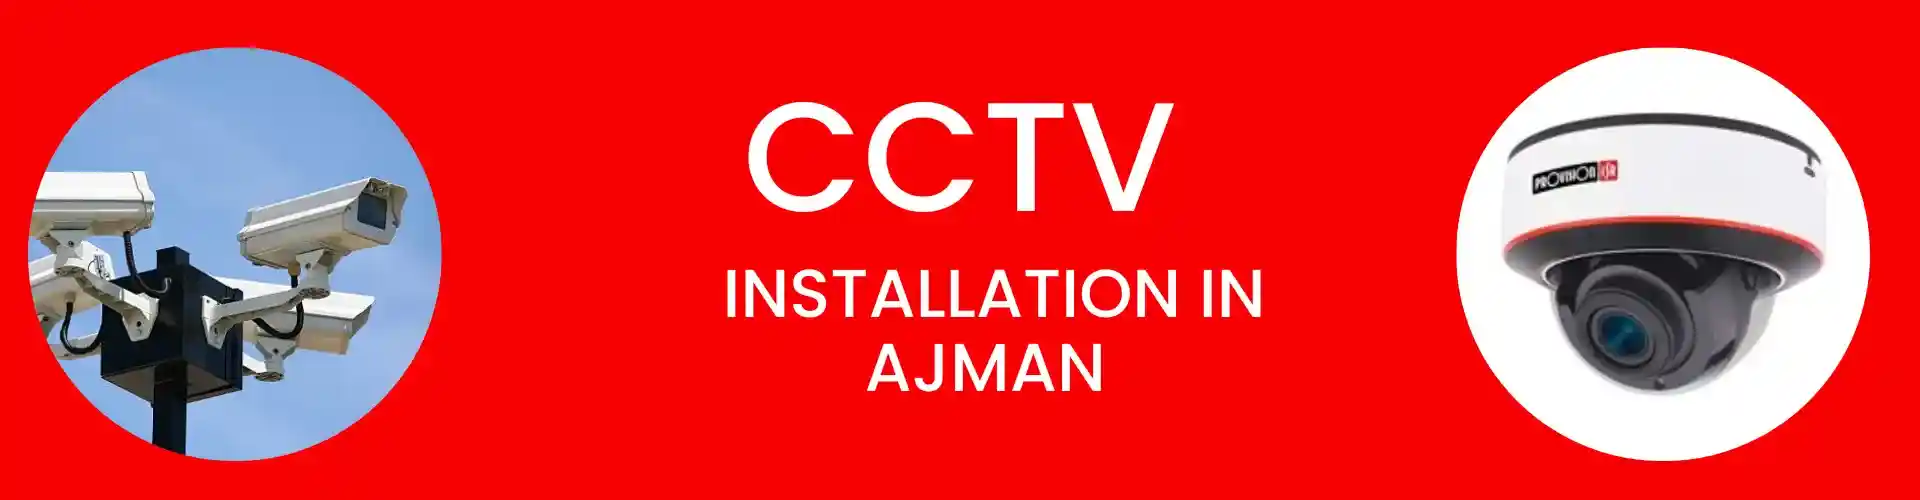 CCTV installation company in Ajman